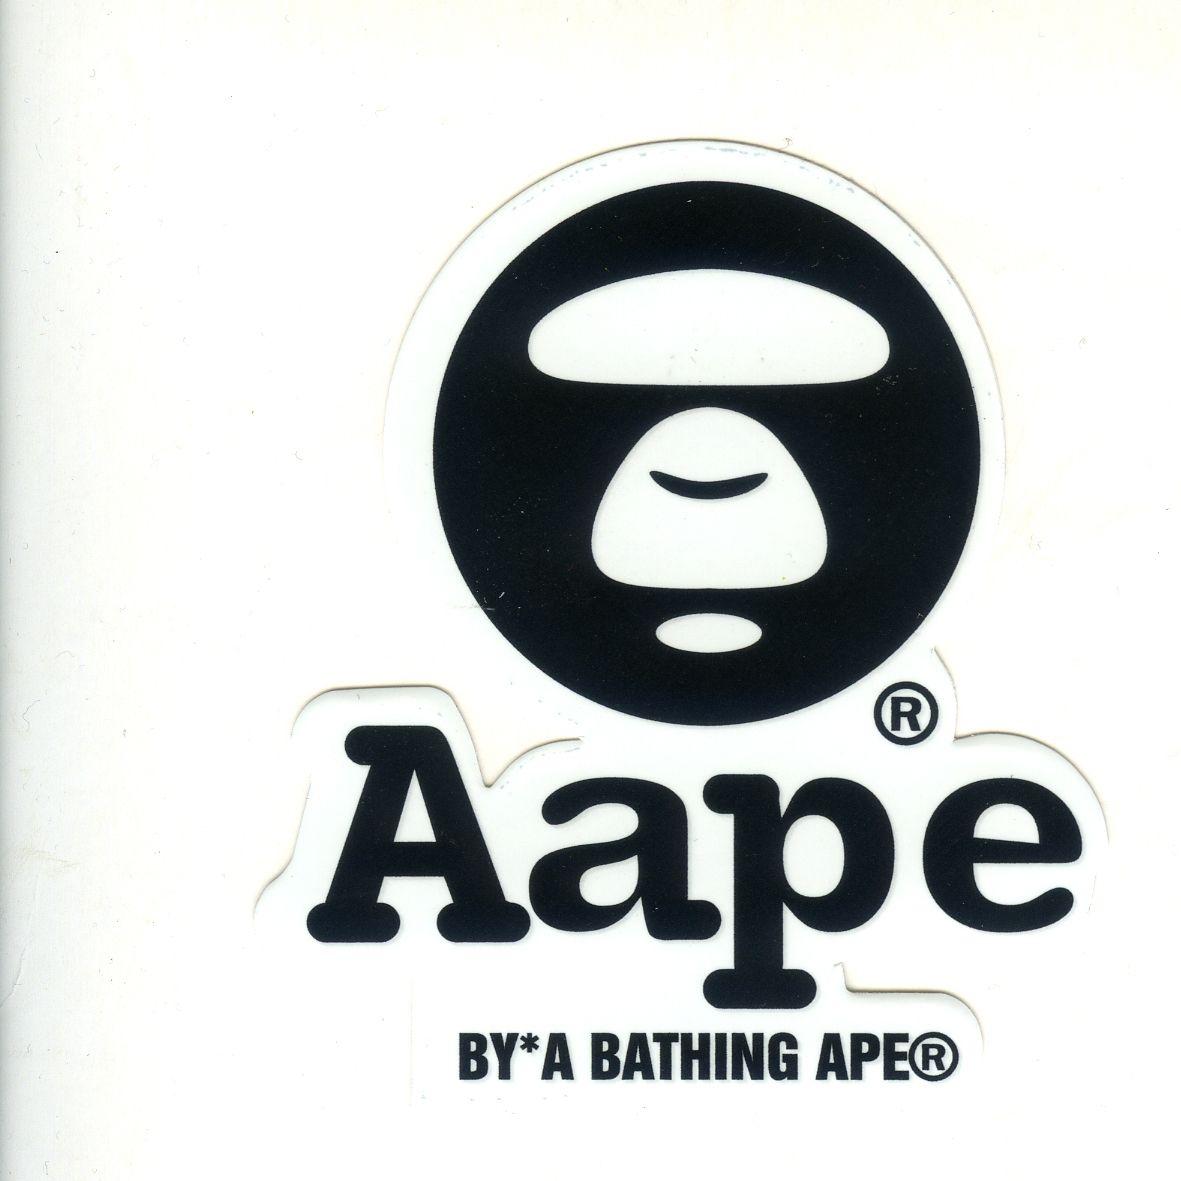 White Bathing Ape Logo - 1700 AAPE By Bathing Ape Badge Logo , Height 8 cm decal sticker ...